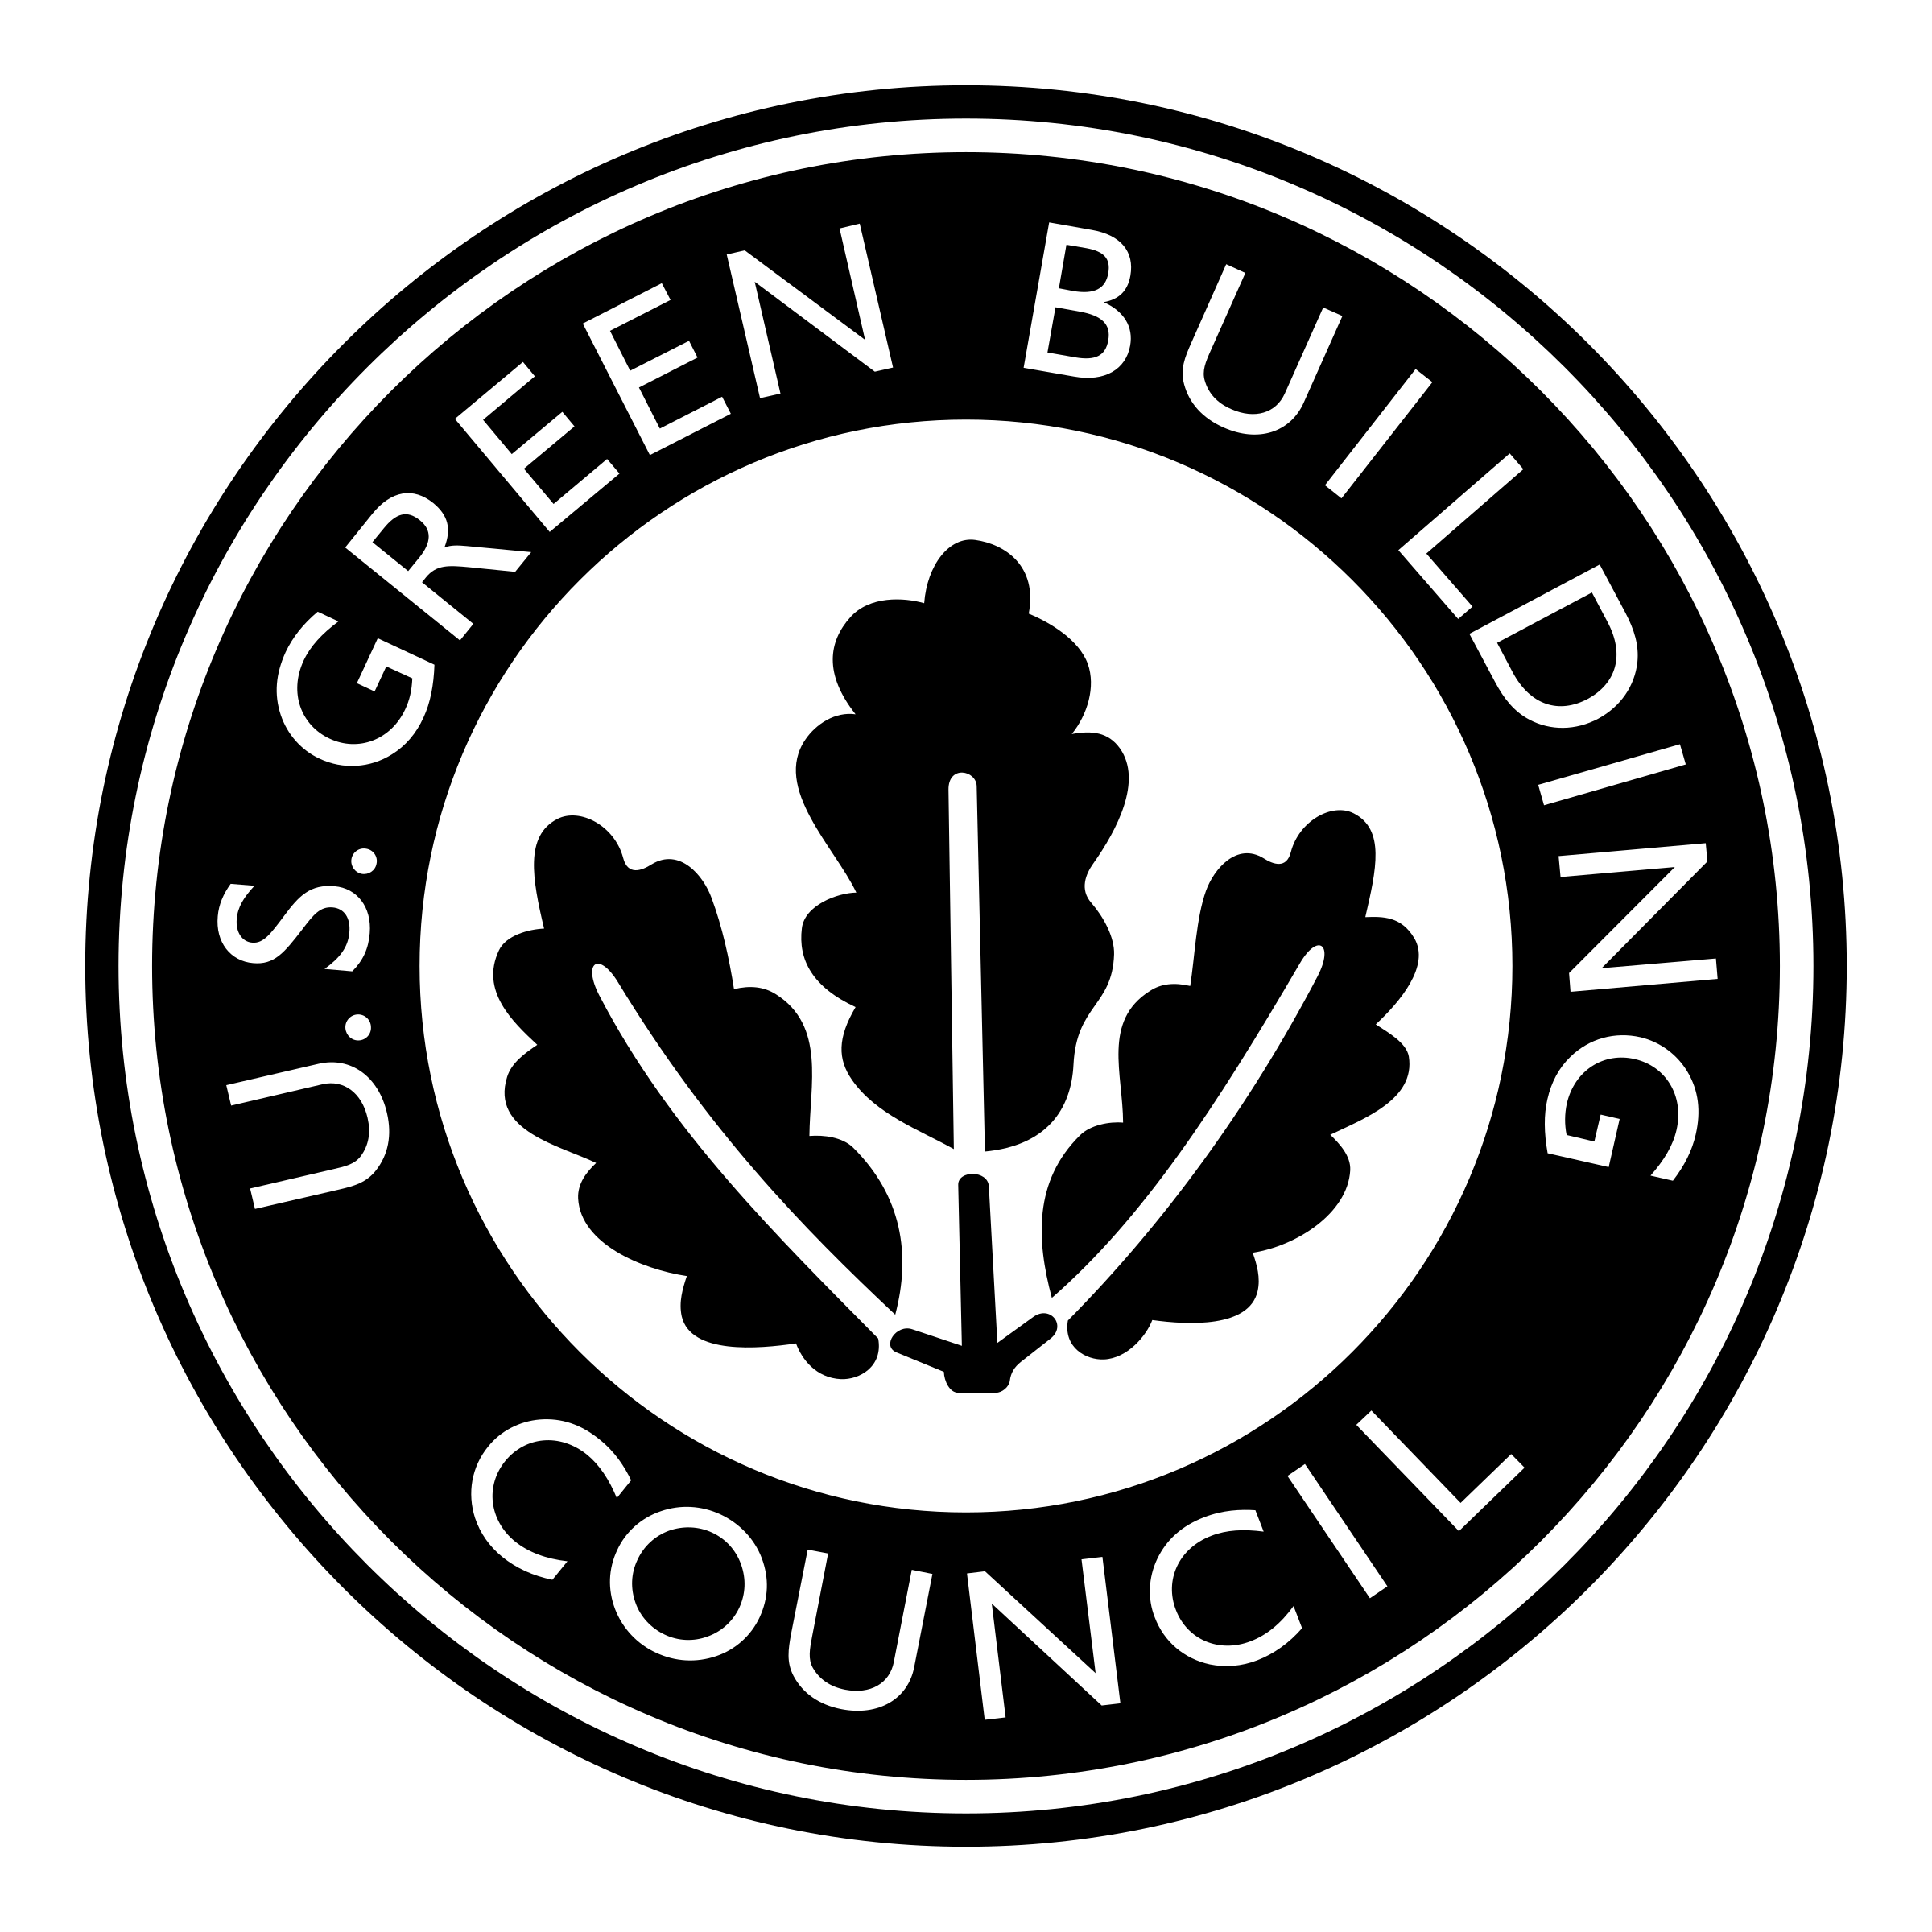 u-s-green-building-council-logo-png-transparent